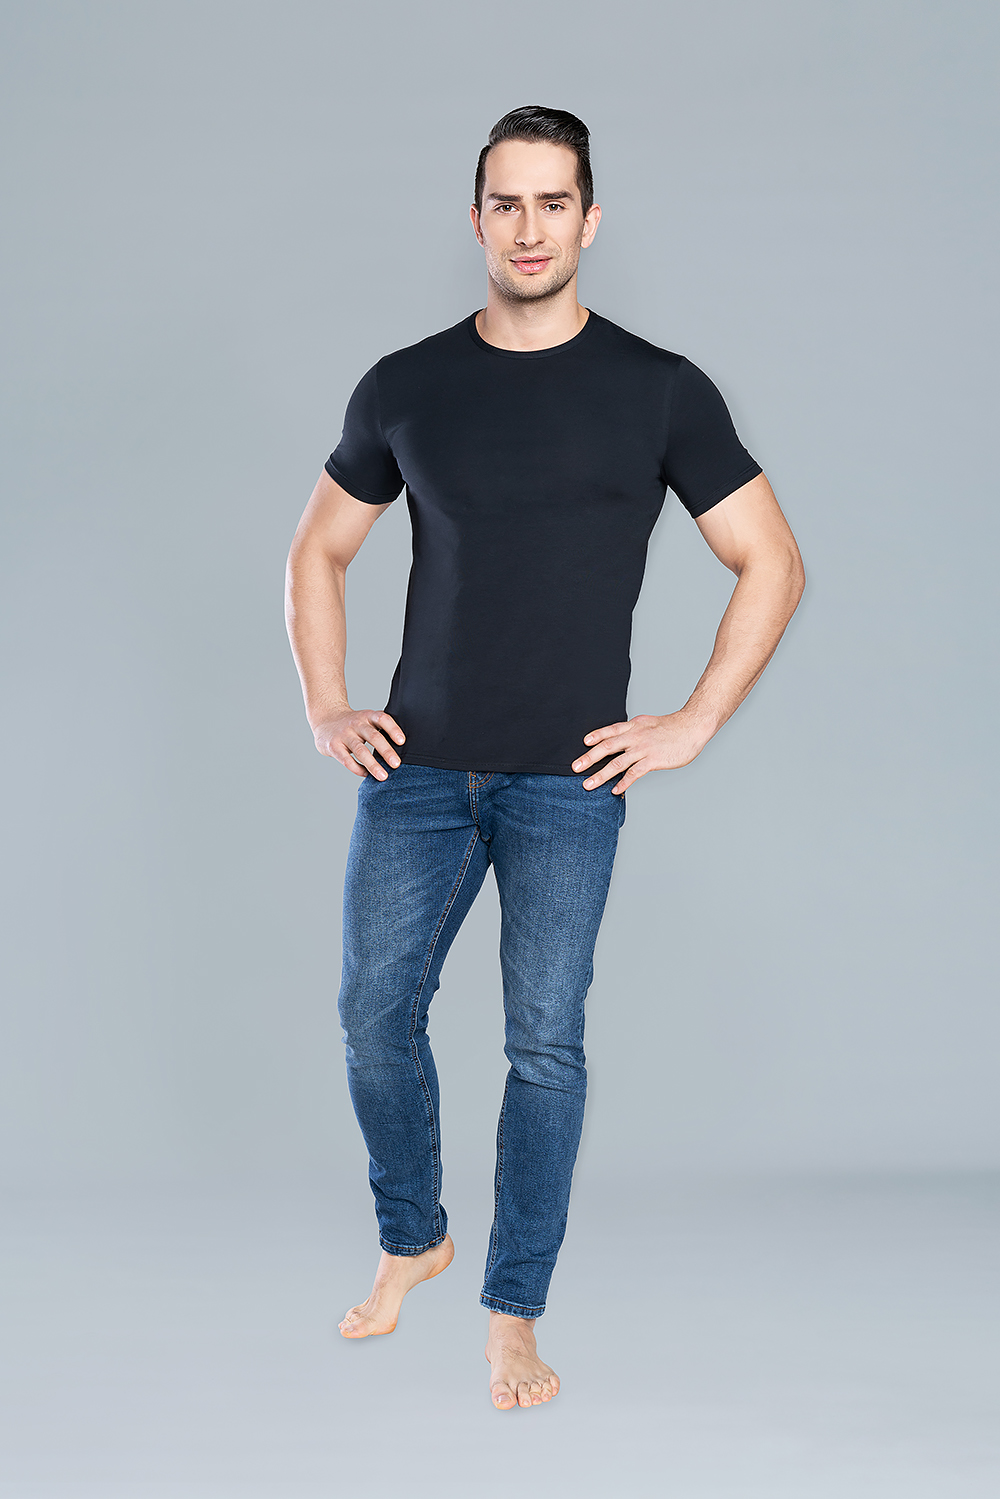 Ikar T-shirt with short sleeves - black